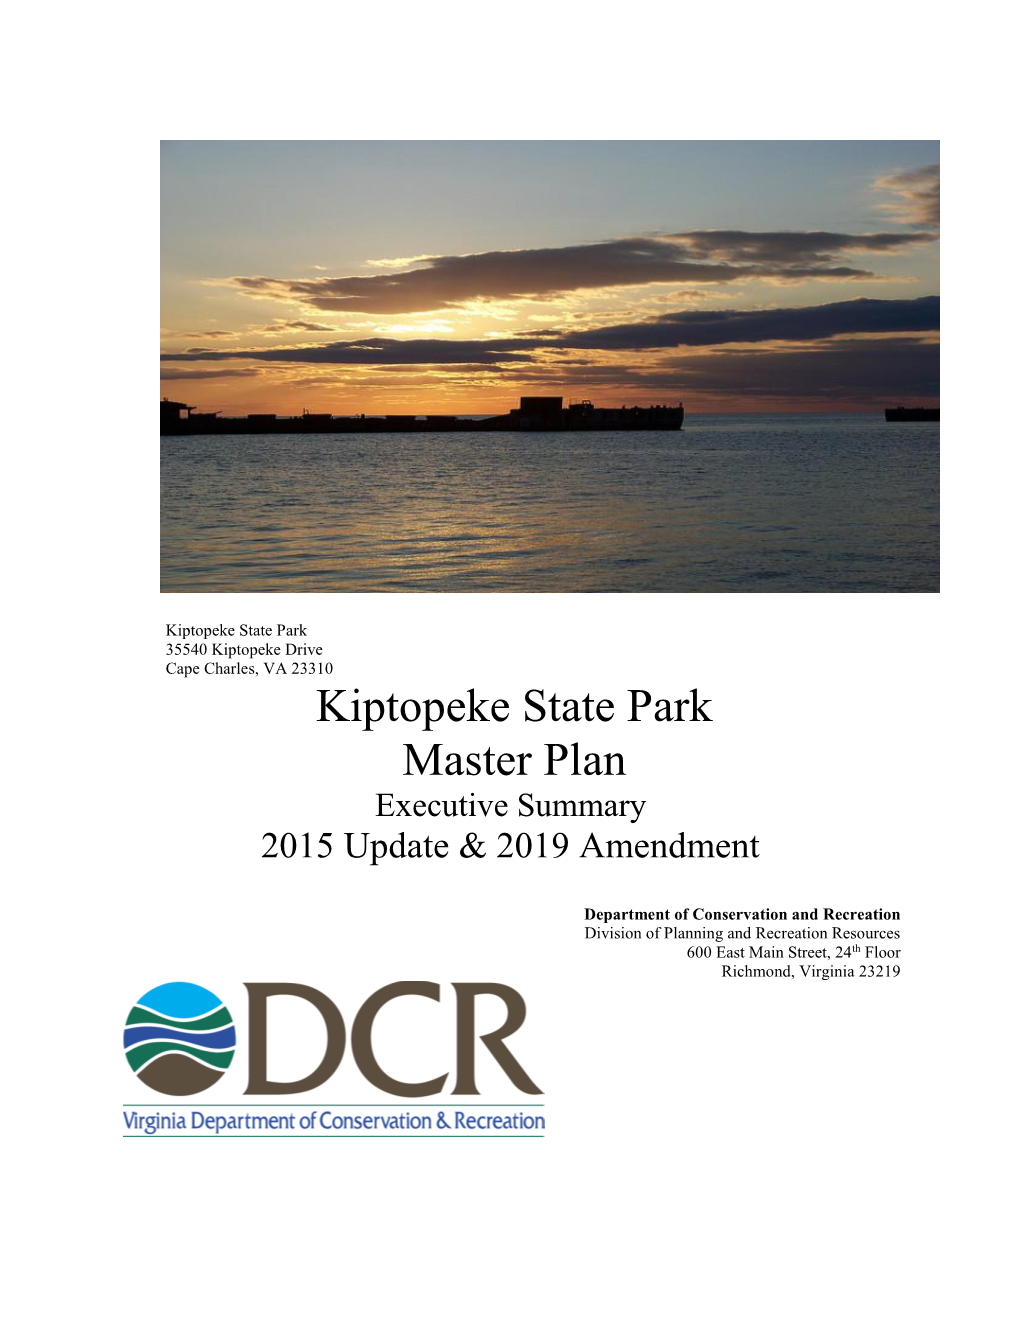 Kiptopeke State Park Master Plan Executive Summary